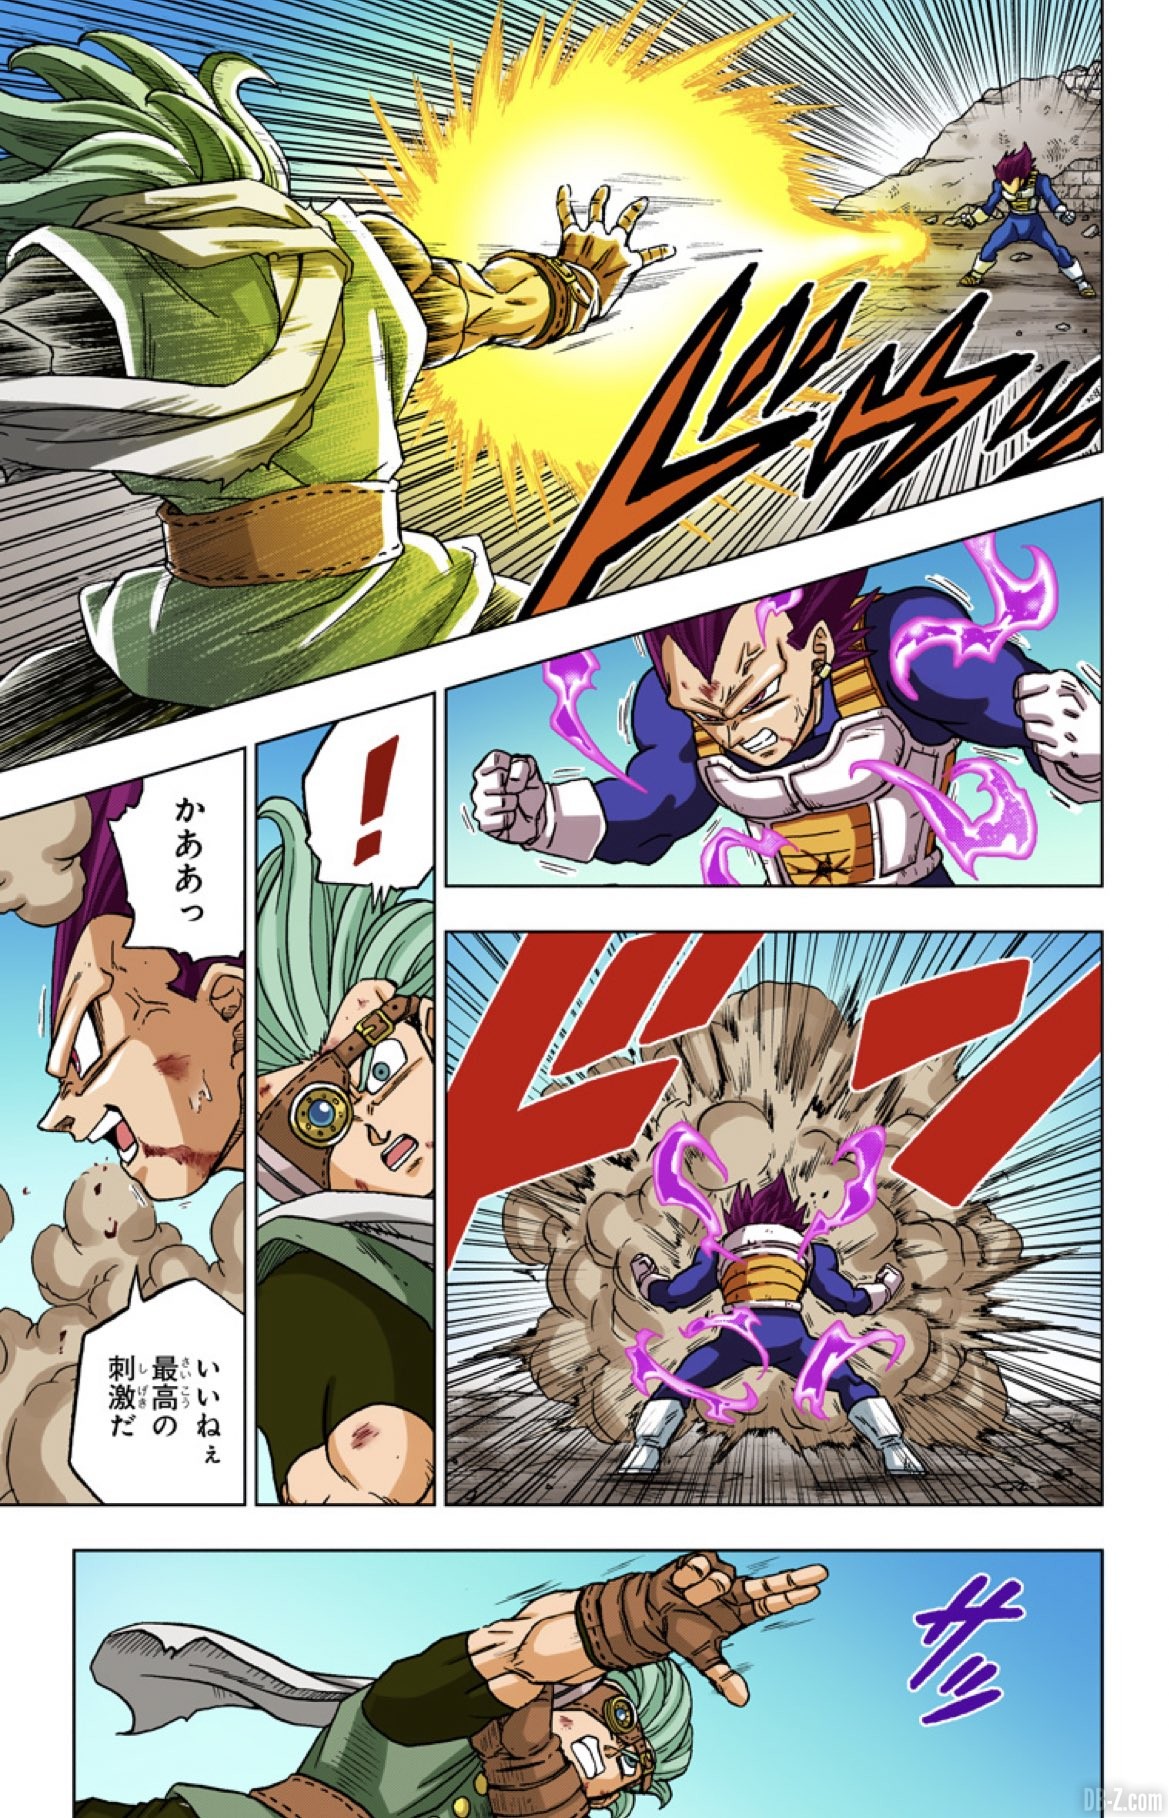 Dragon Ball Super Manga Edition Color Tomes 17 Traduit en Français Goku  Vegeta